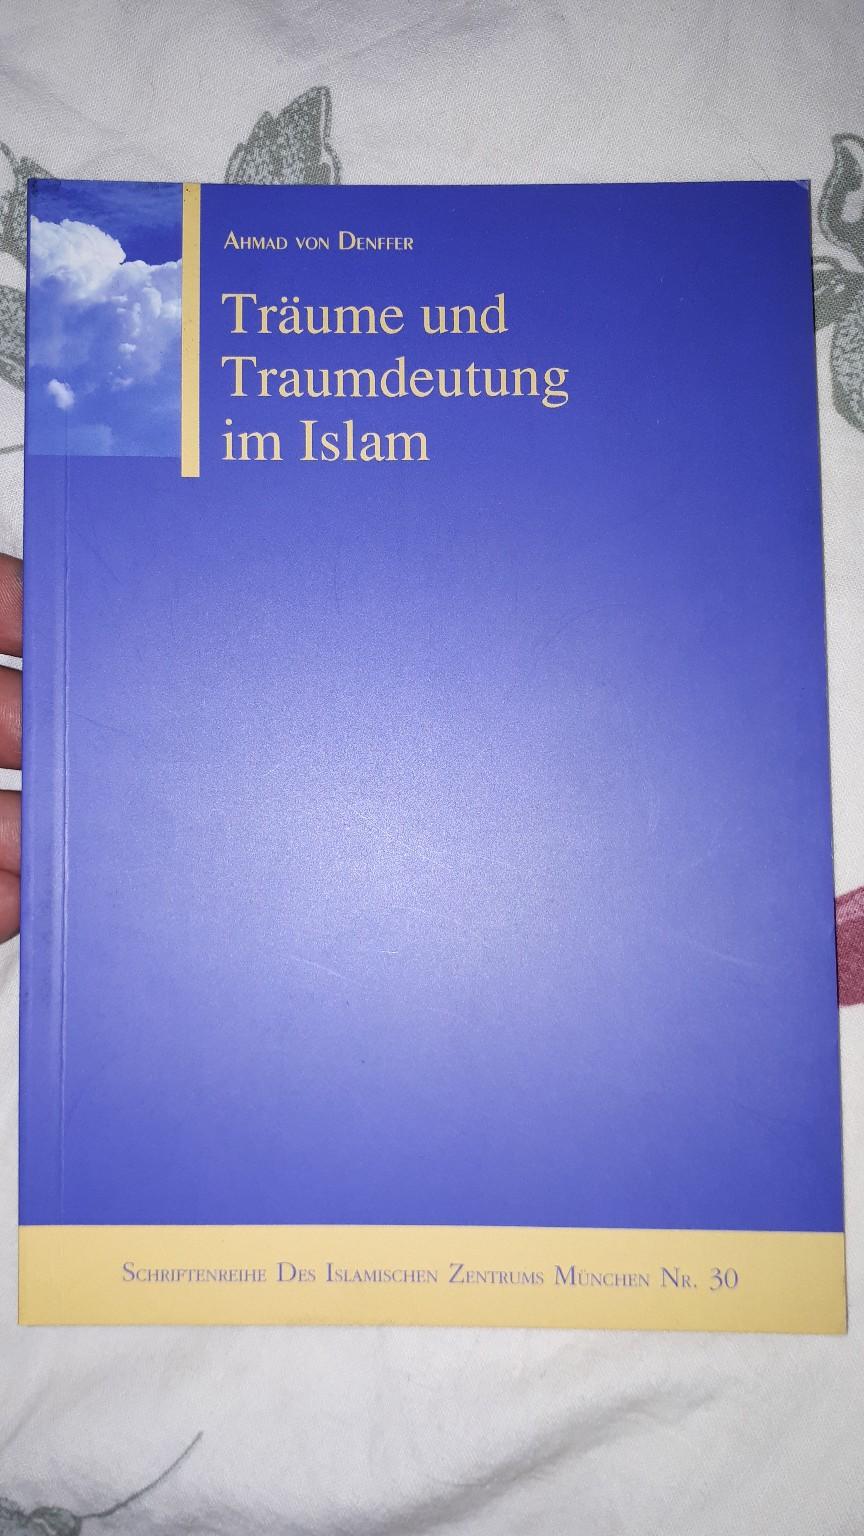 Buch Traume Und Traumdeutung Im Islam In 98634 Wasungen For 7 00 For Sale Shpock